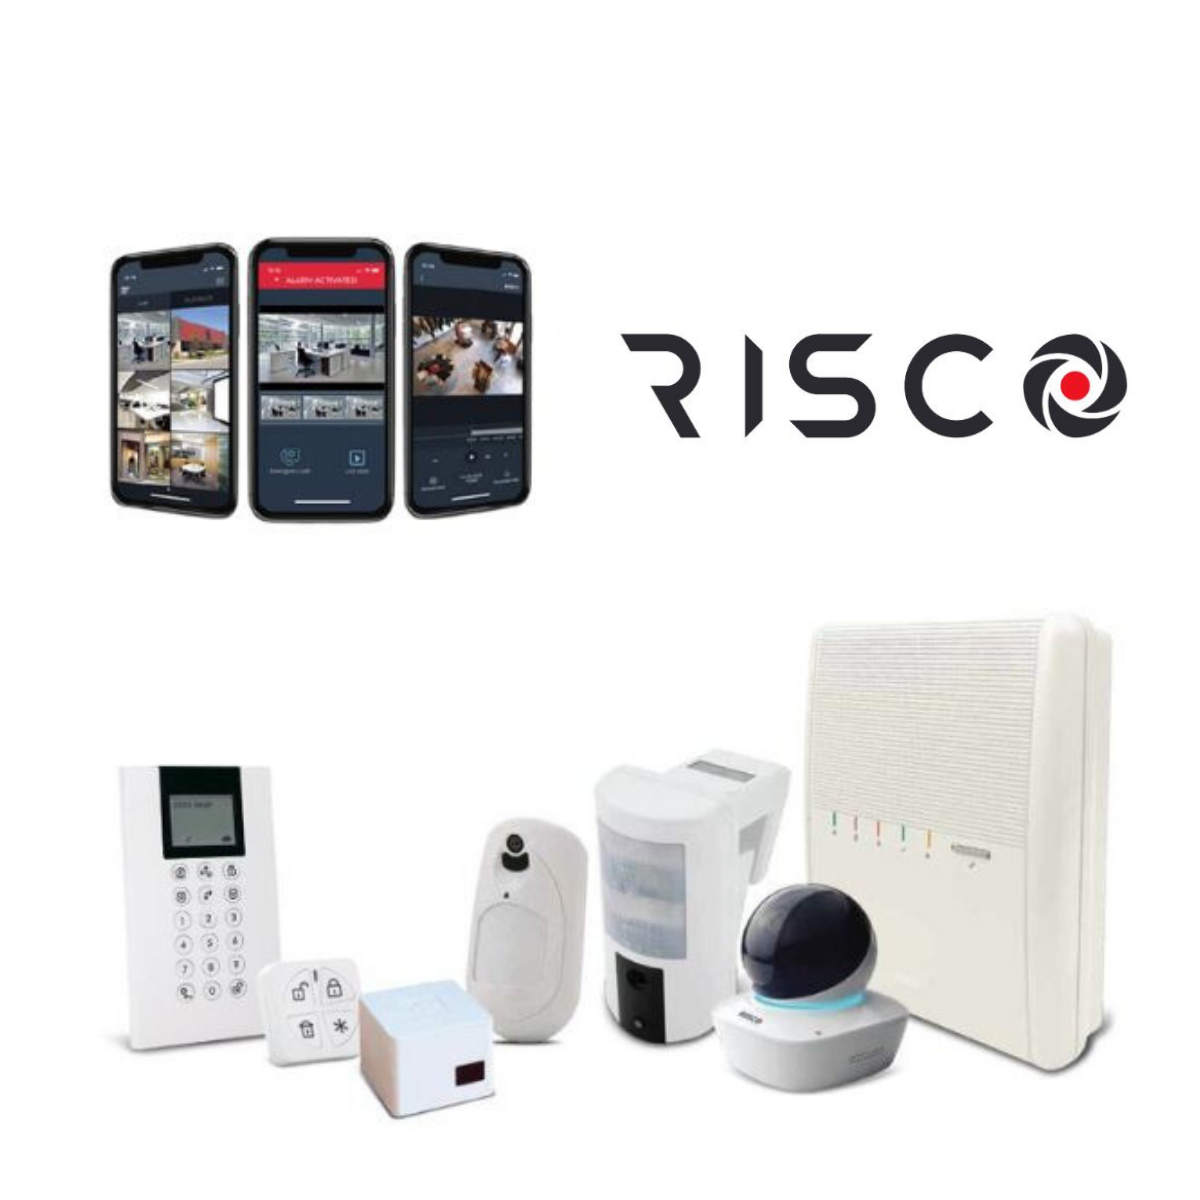 Risco Security Alarm Systems